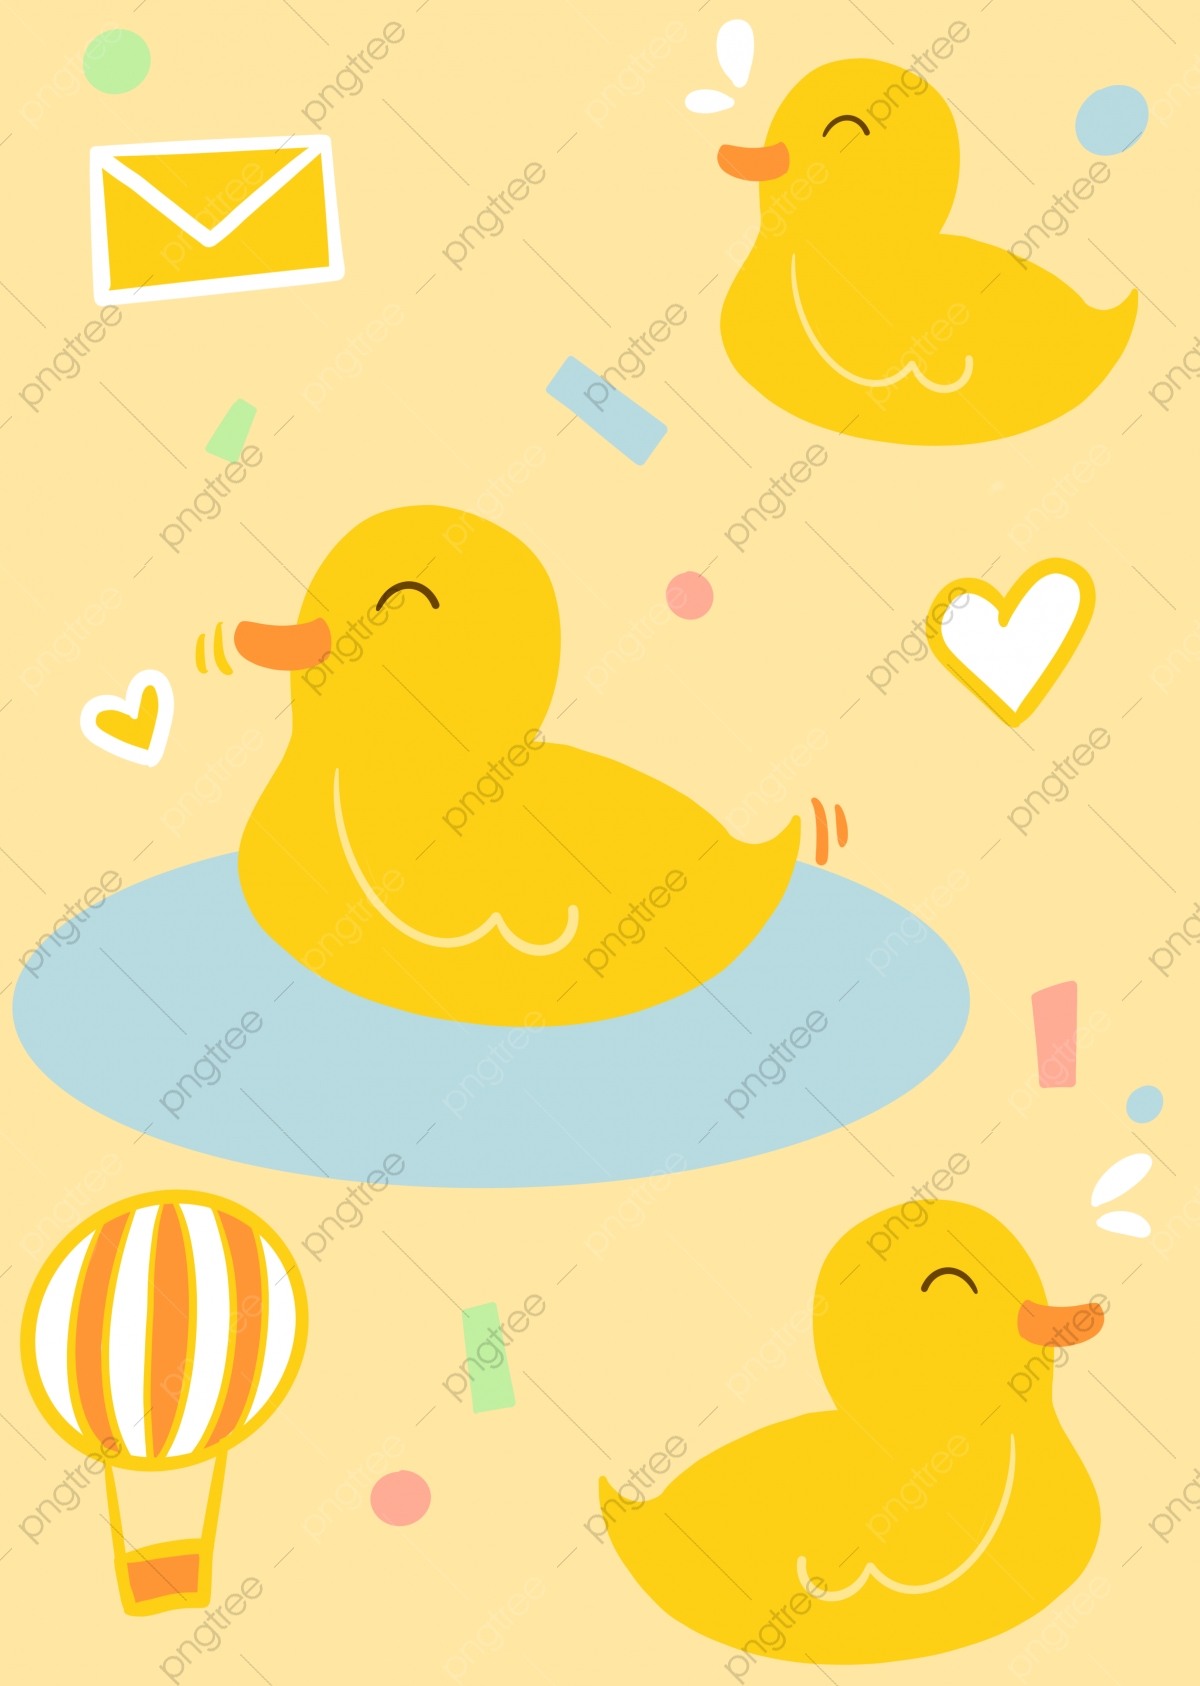 Cute Yellow Ducks Wallpapers